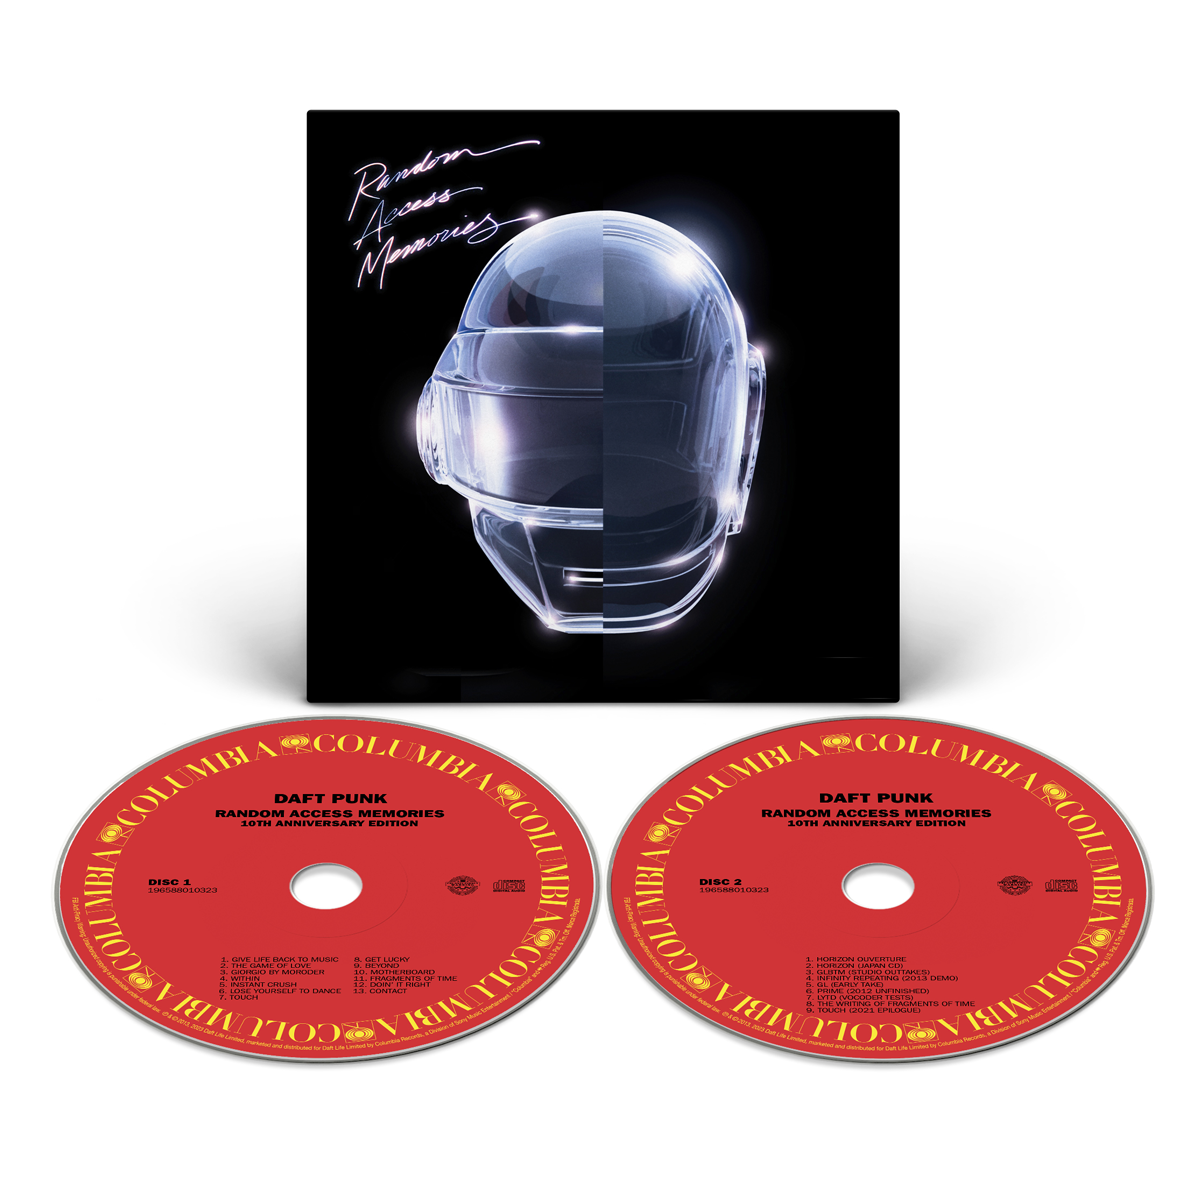 Daft Punk album 'Random Access Memories' turns 8 years old